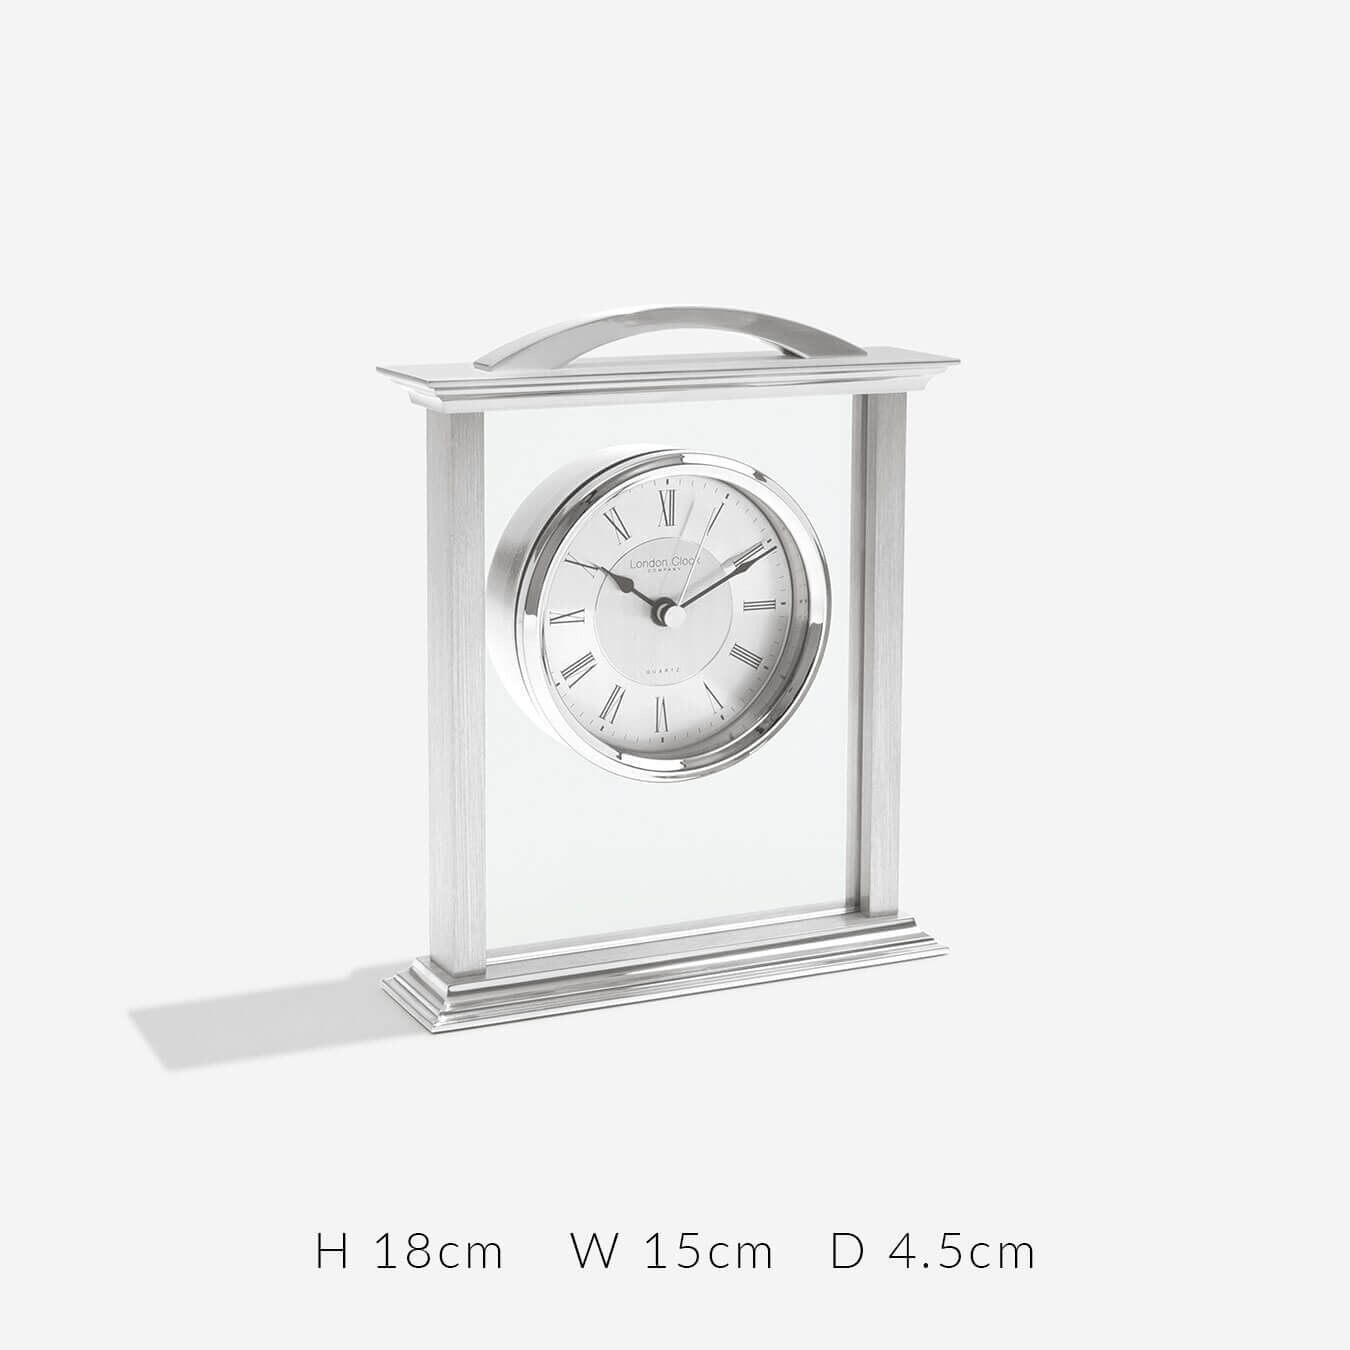 London Clock Company. Silver Mantel Clock - timeframedclocks